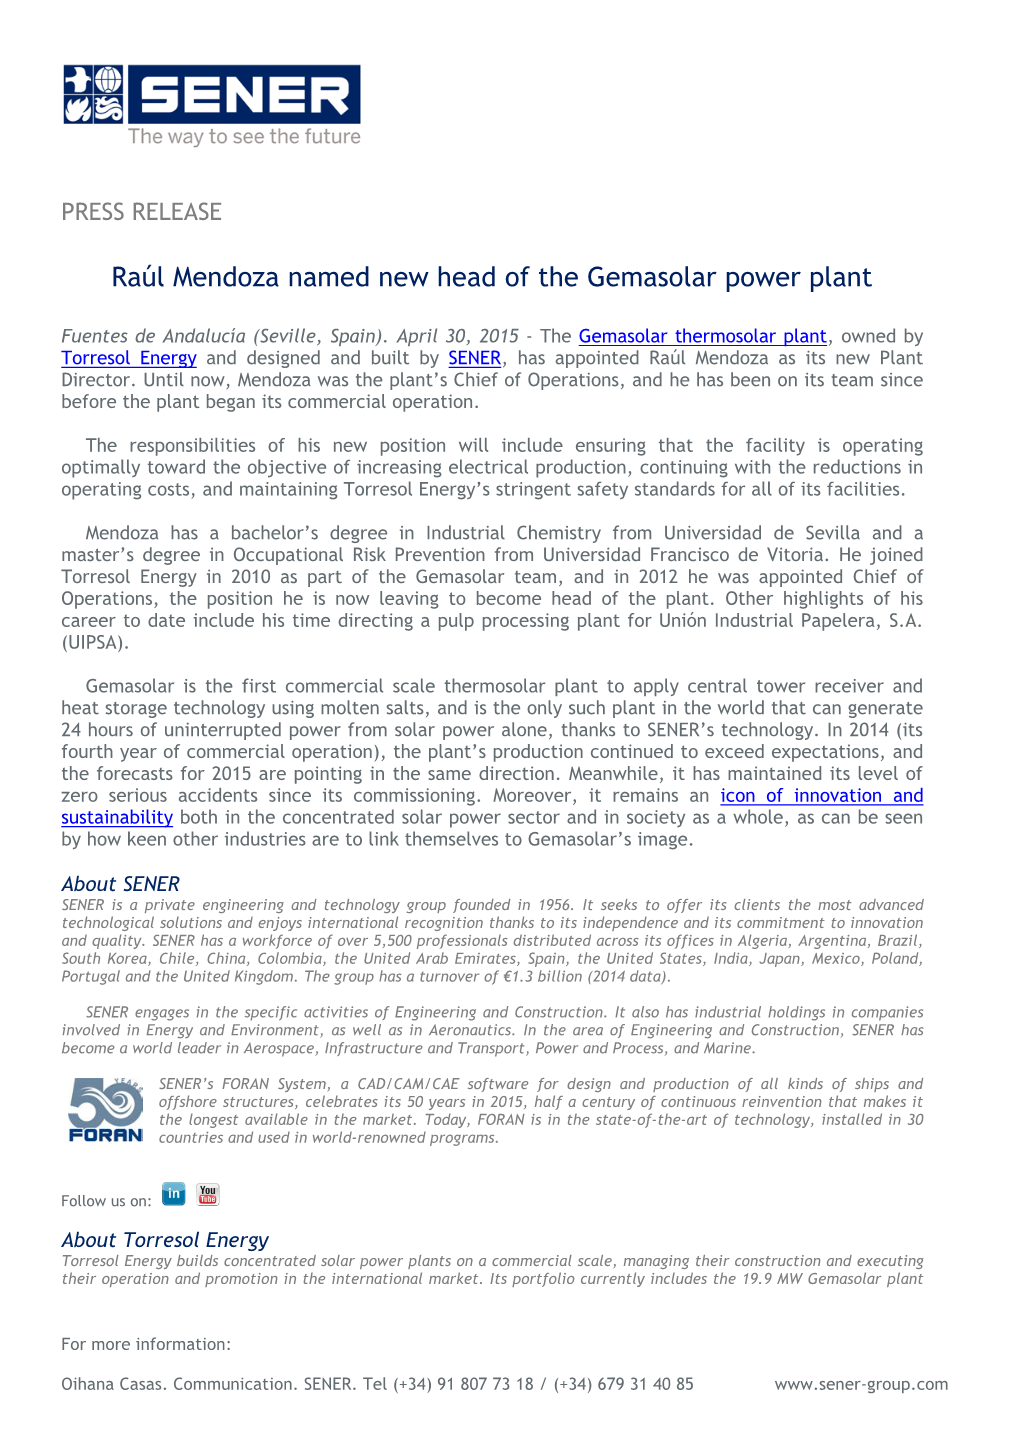 Raúl Mendoza Named New Head of the Gemasolar Power Plant